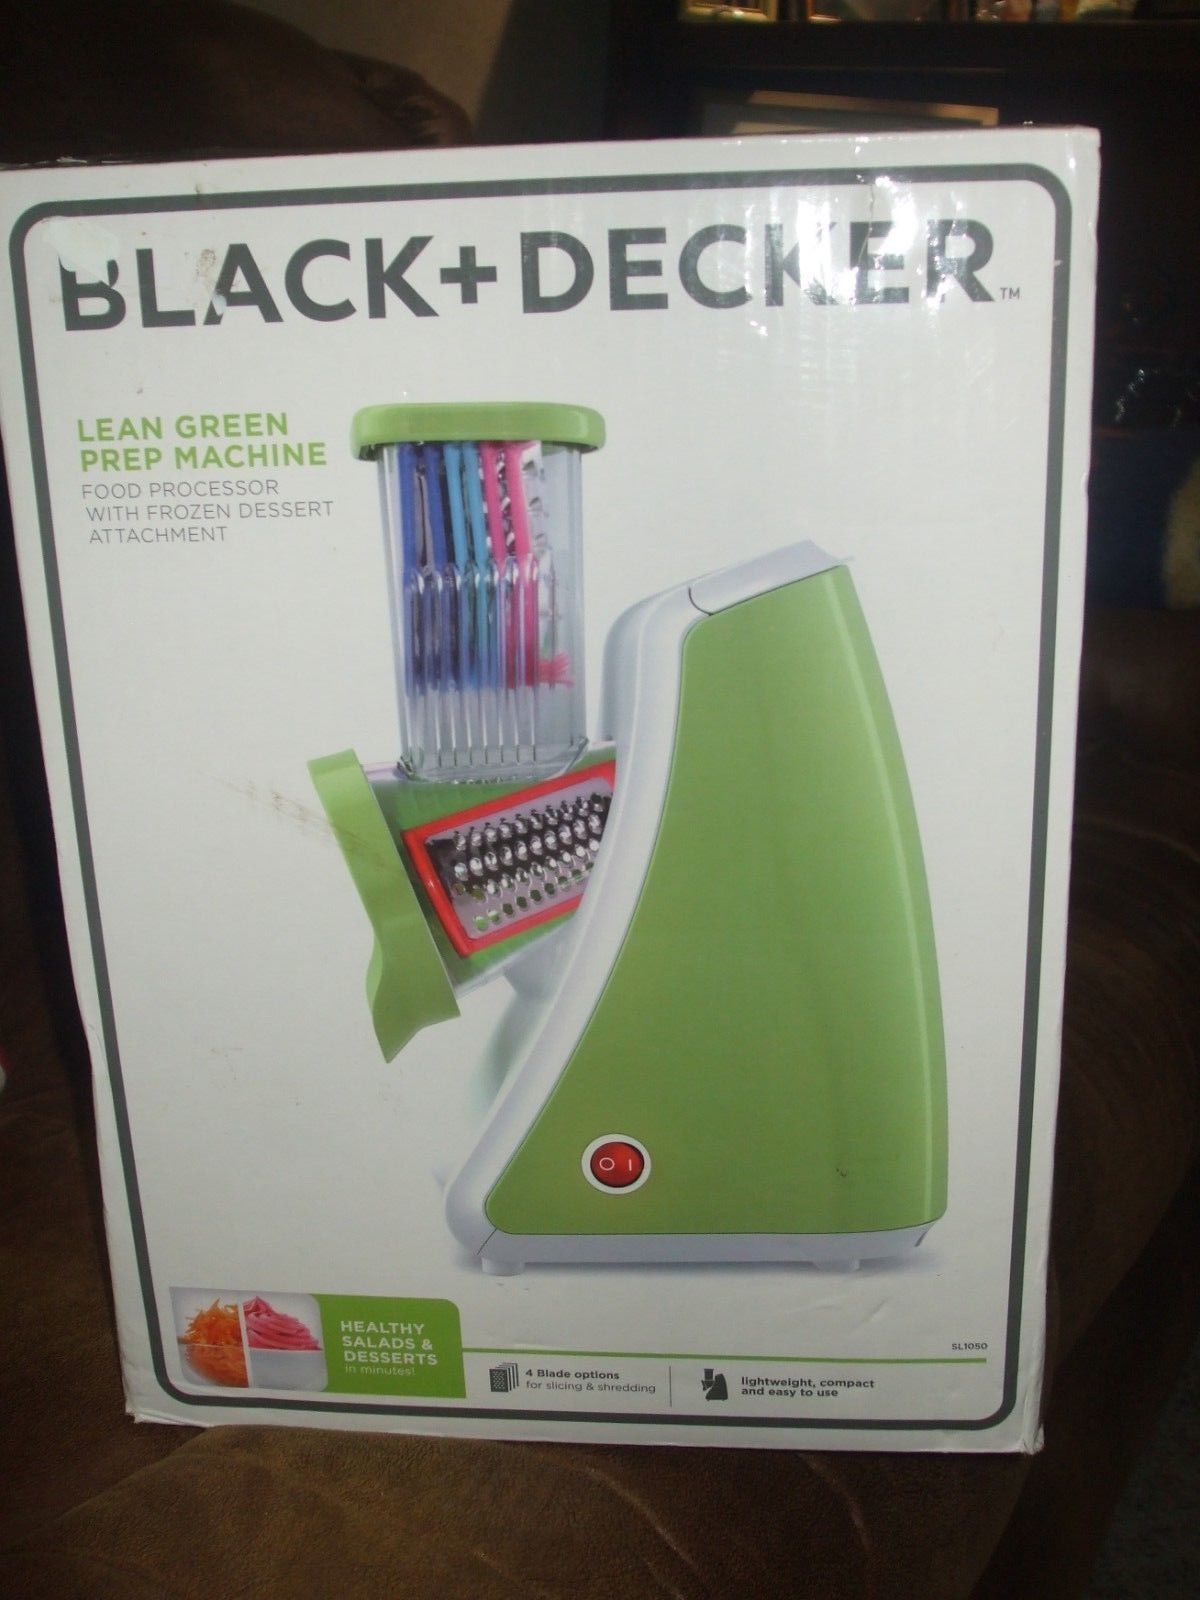  Black & Decker SL1050 Lean Prep Machine Food Processor, Green:  Home & Kitchen